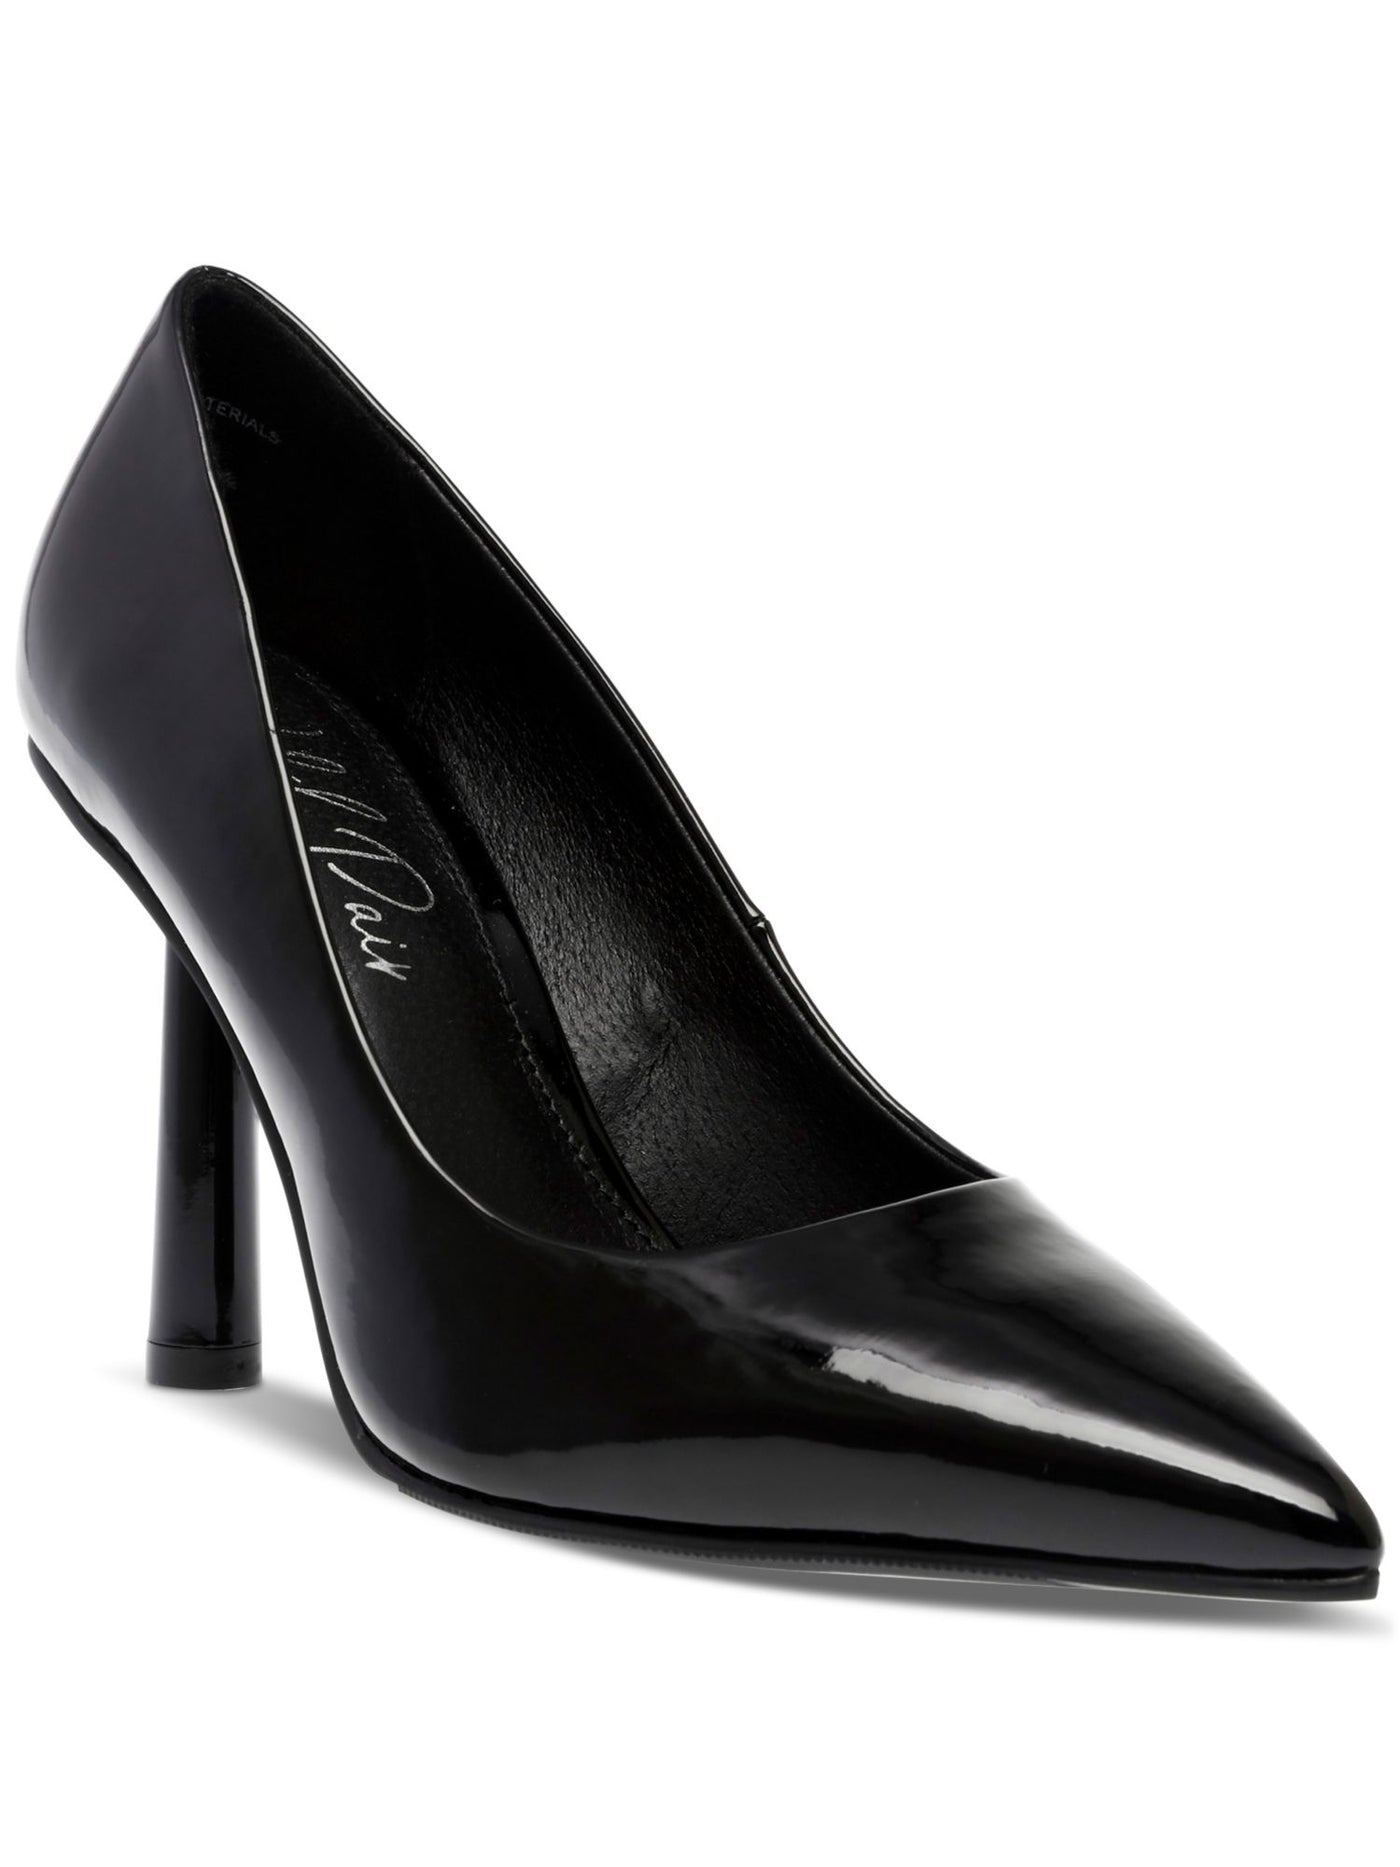 WILD PAIR Womens Black Slip Resistant Comfort Taraa Pointed Toe Stiletto Slip On Pumps Shoes 7.5 M